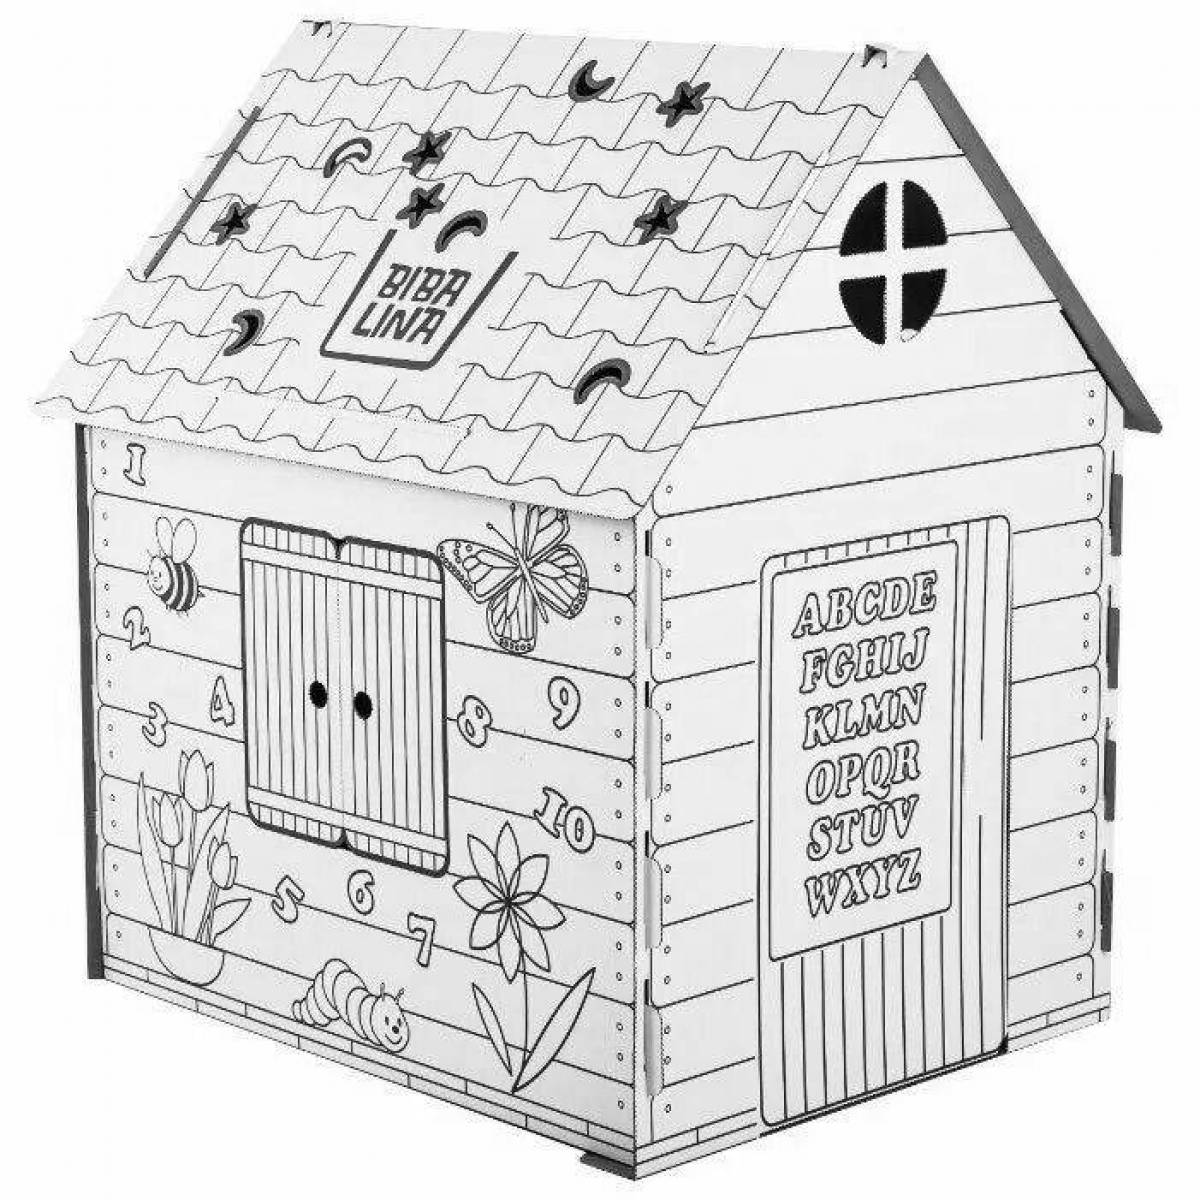 Adorable cardboard house coloring book